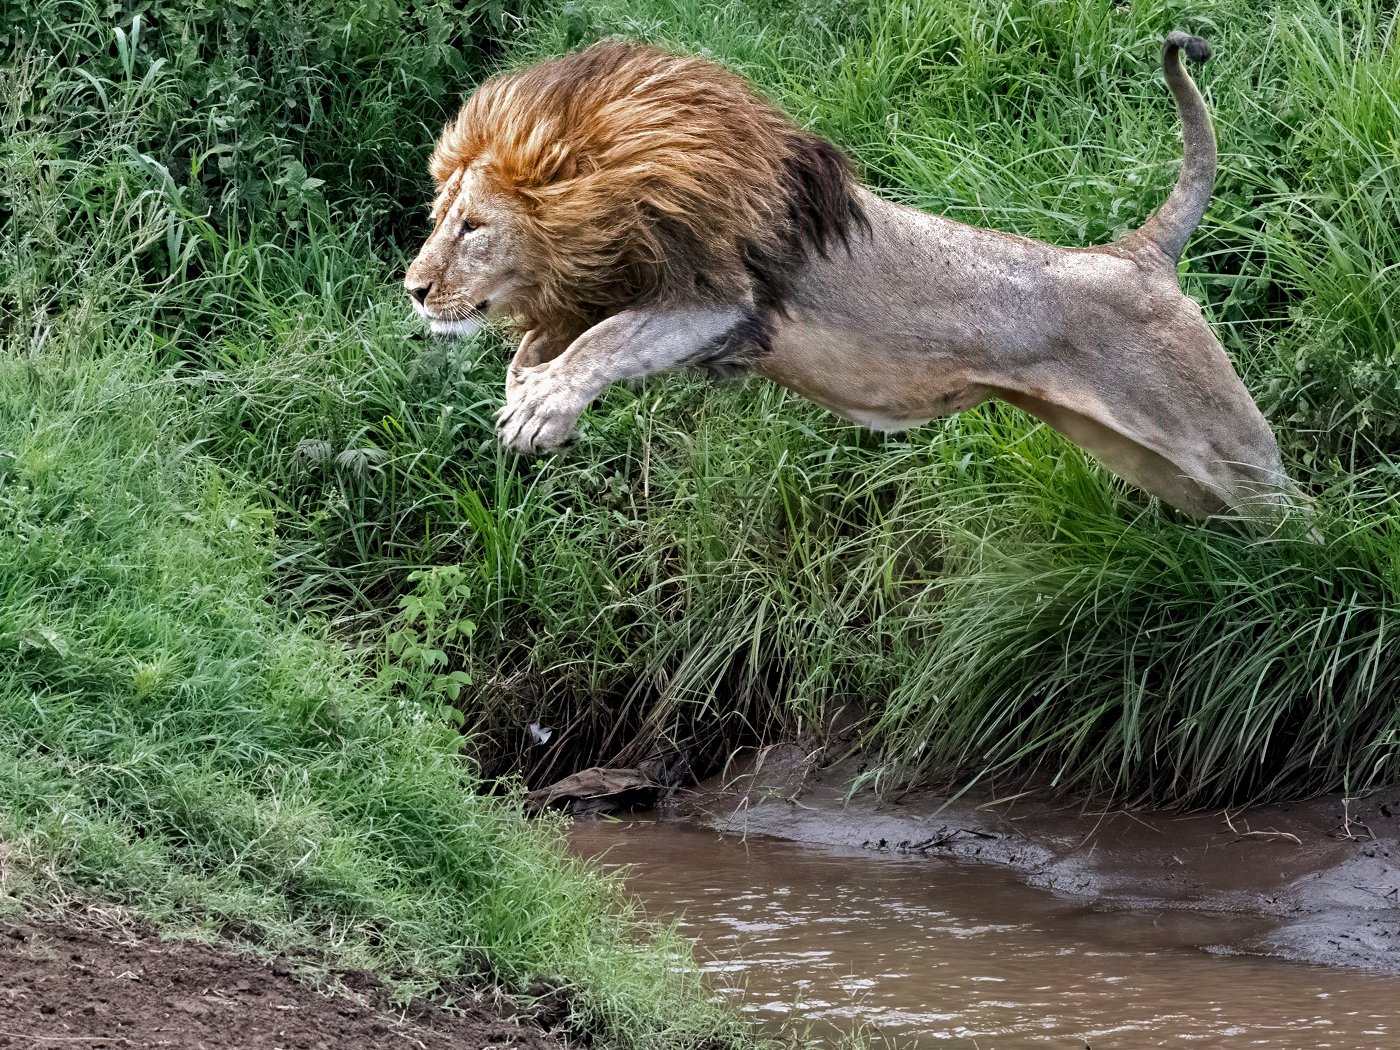 Tanzania Lion Jumping, Marilyn Graham, Cowtown Camera Club, 3rd Place